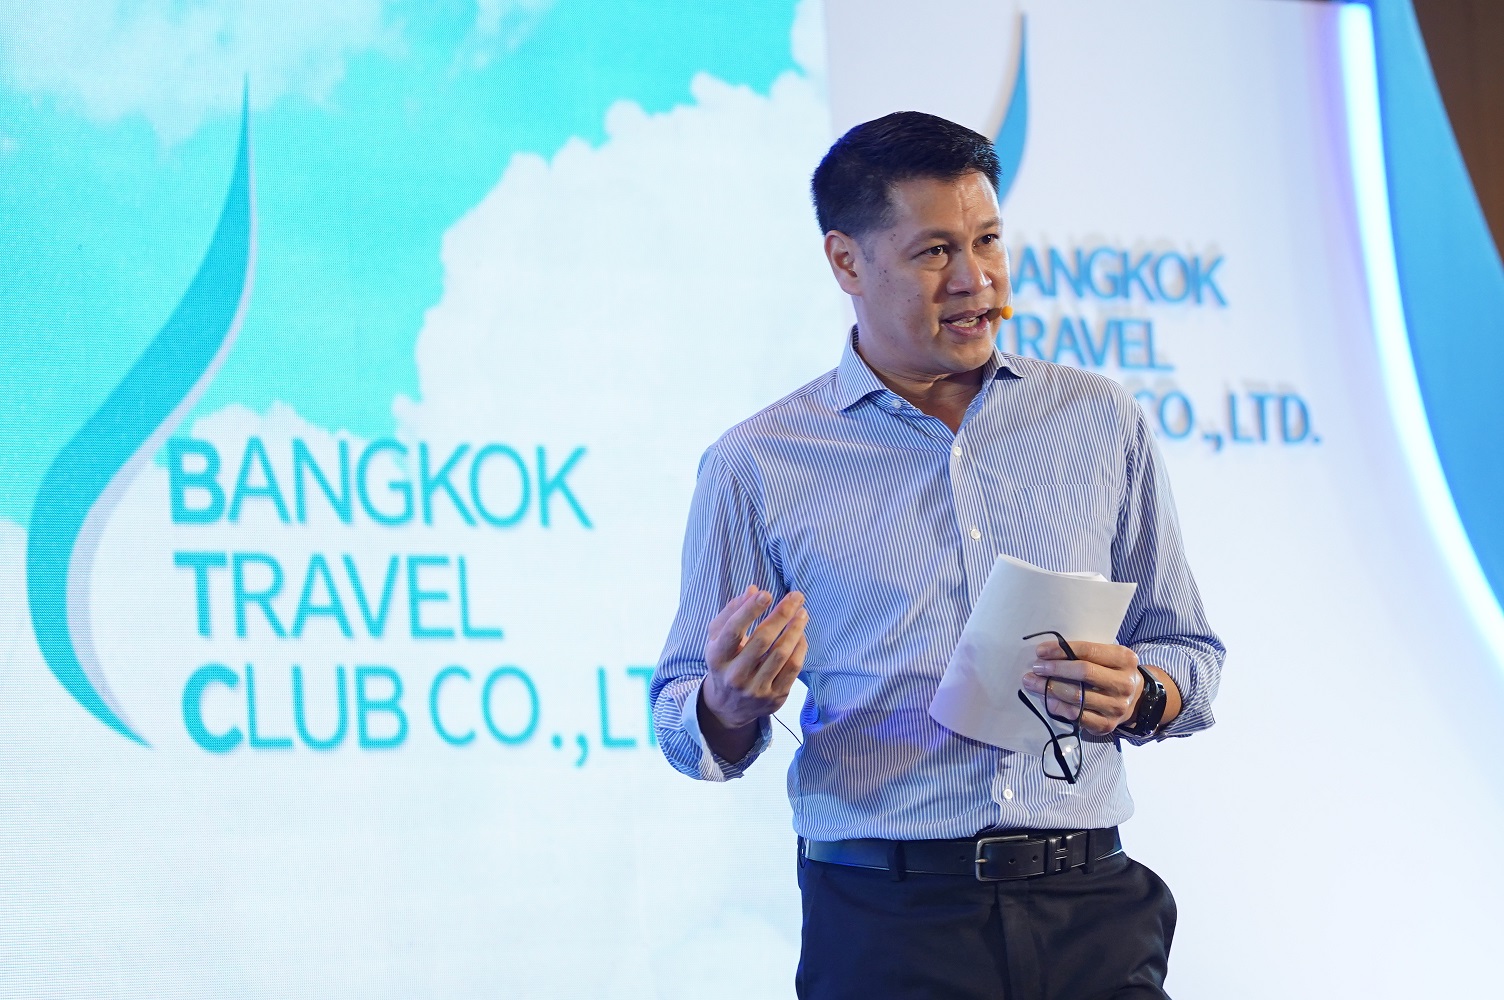 Bangkok Airways with Bangkok Travel Club (BTC) Launch 2020 Travel Campaign